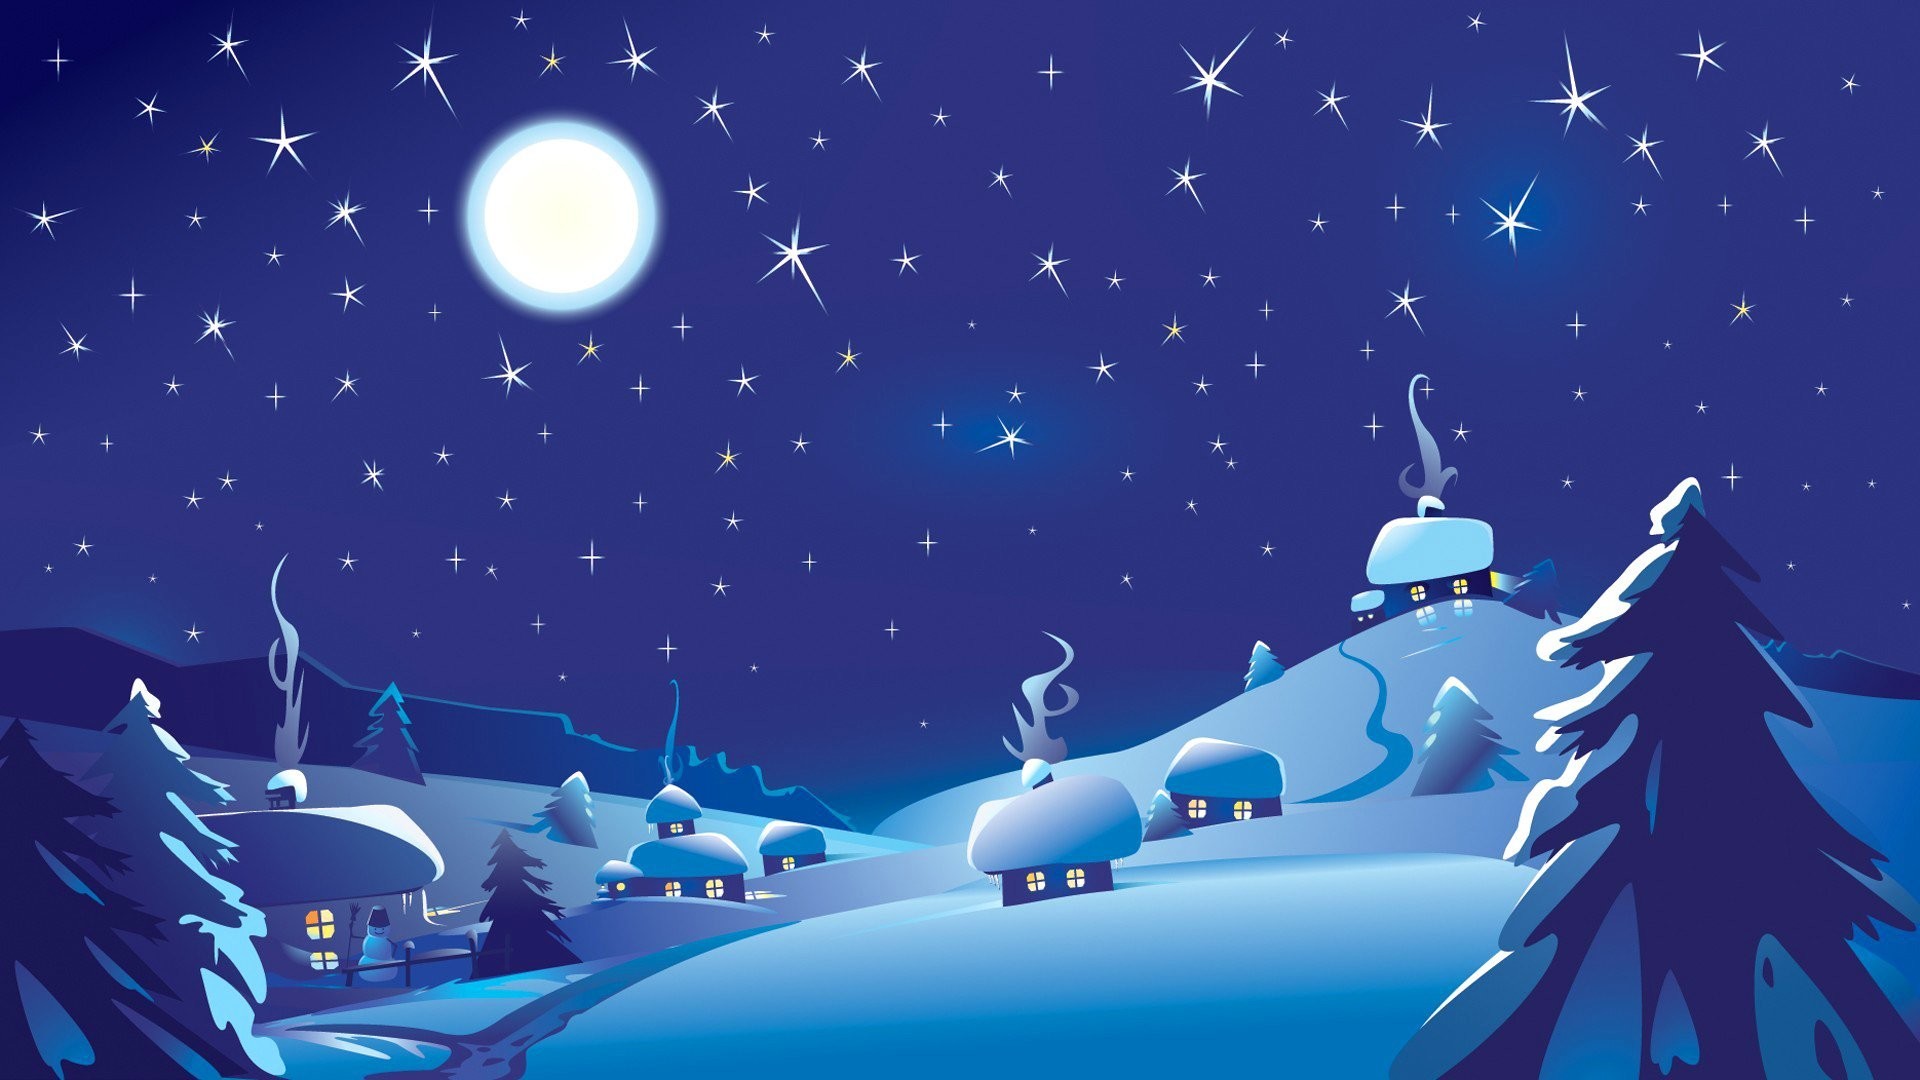 landscape-winter-night-sky-moon-star-hata-snowman